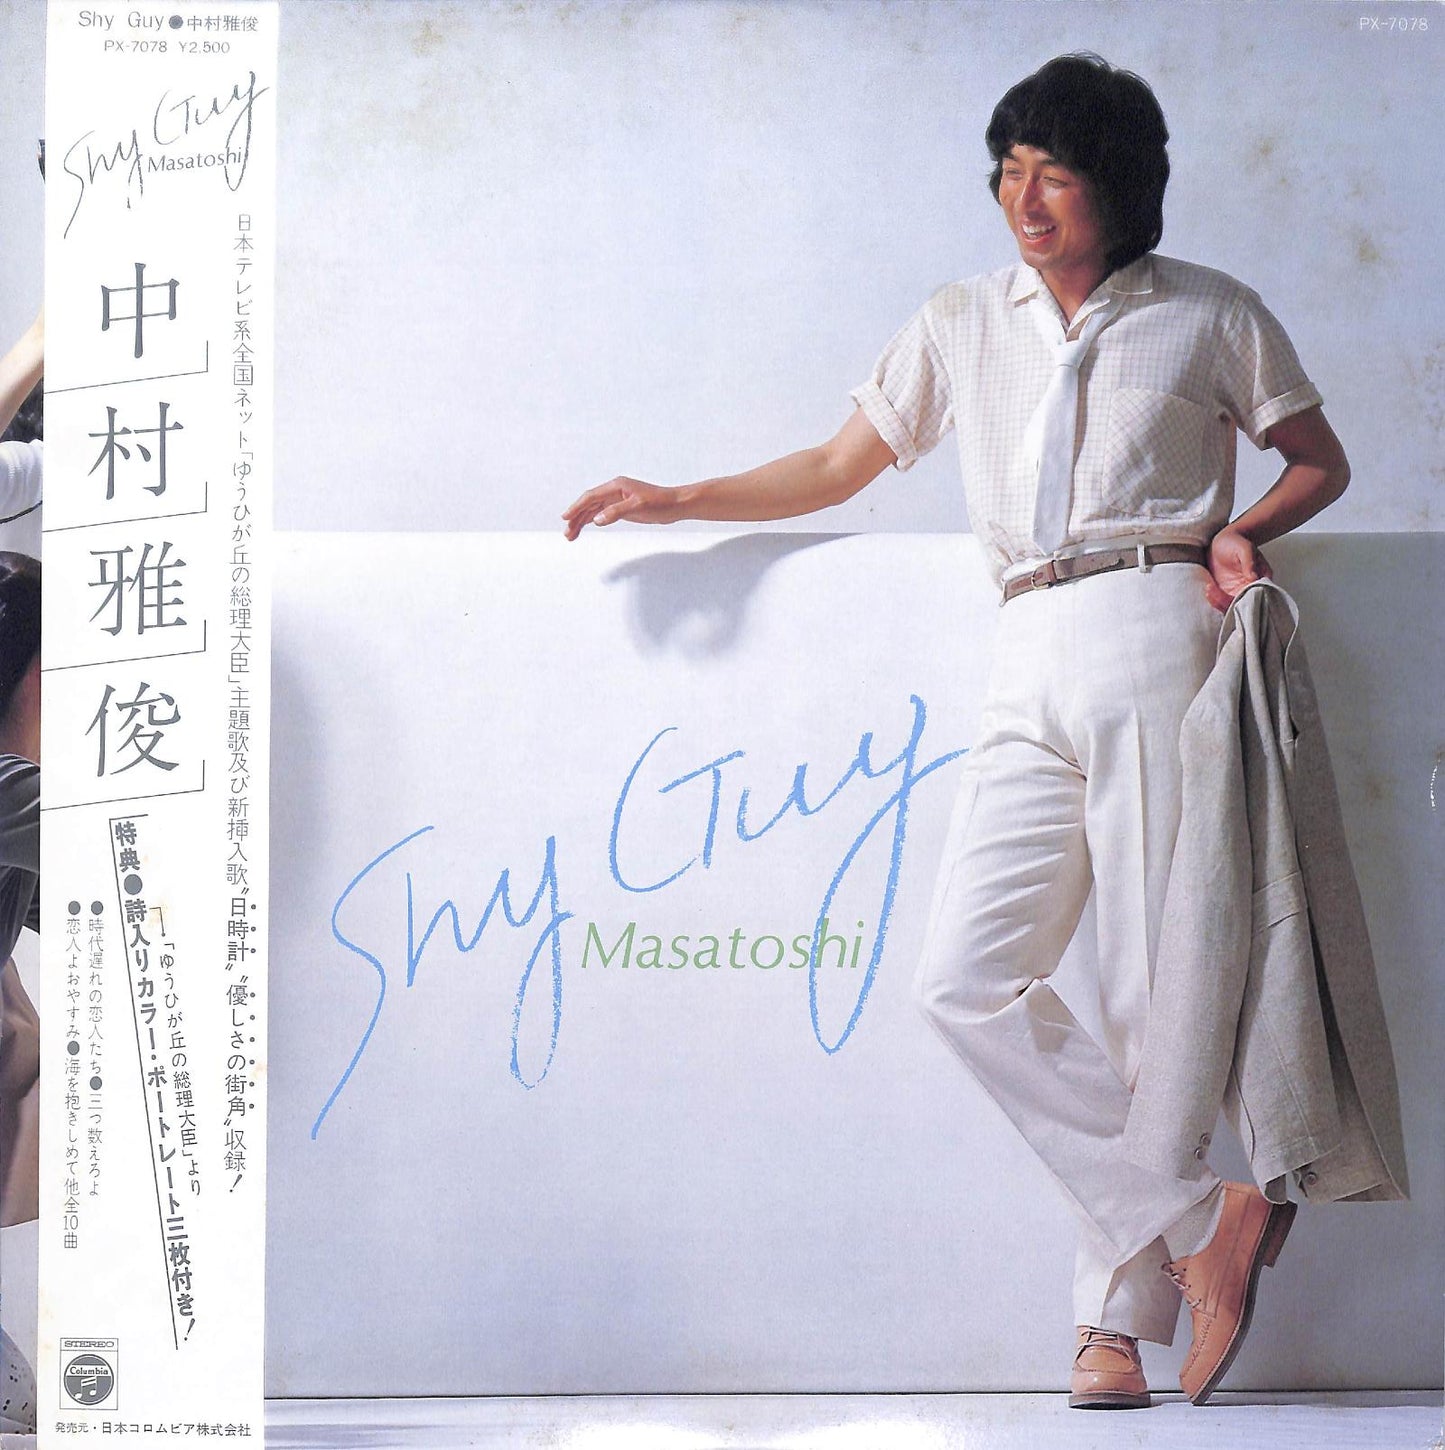 NAKAMURA MASATOSHI - Shy Guy